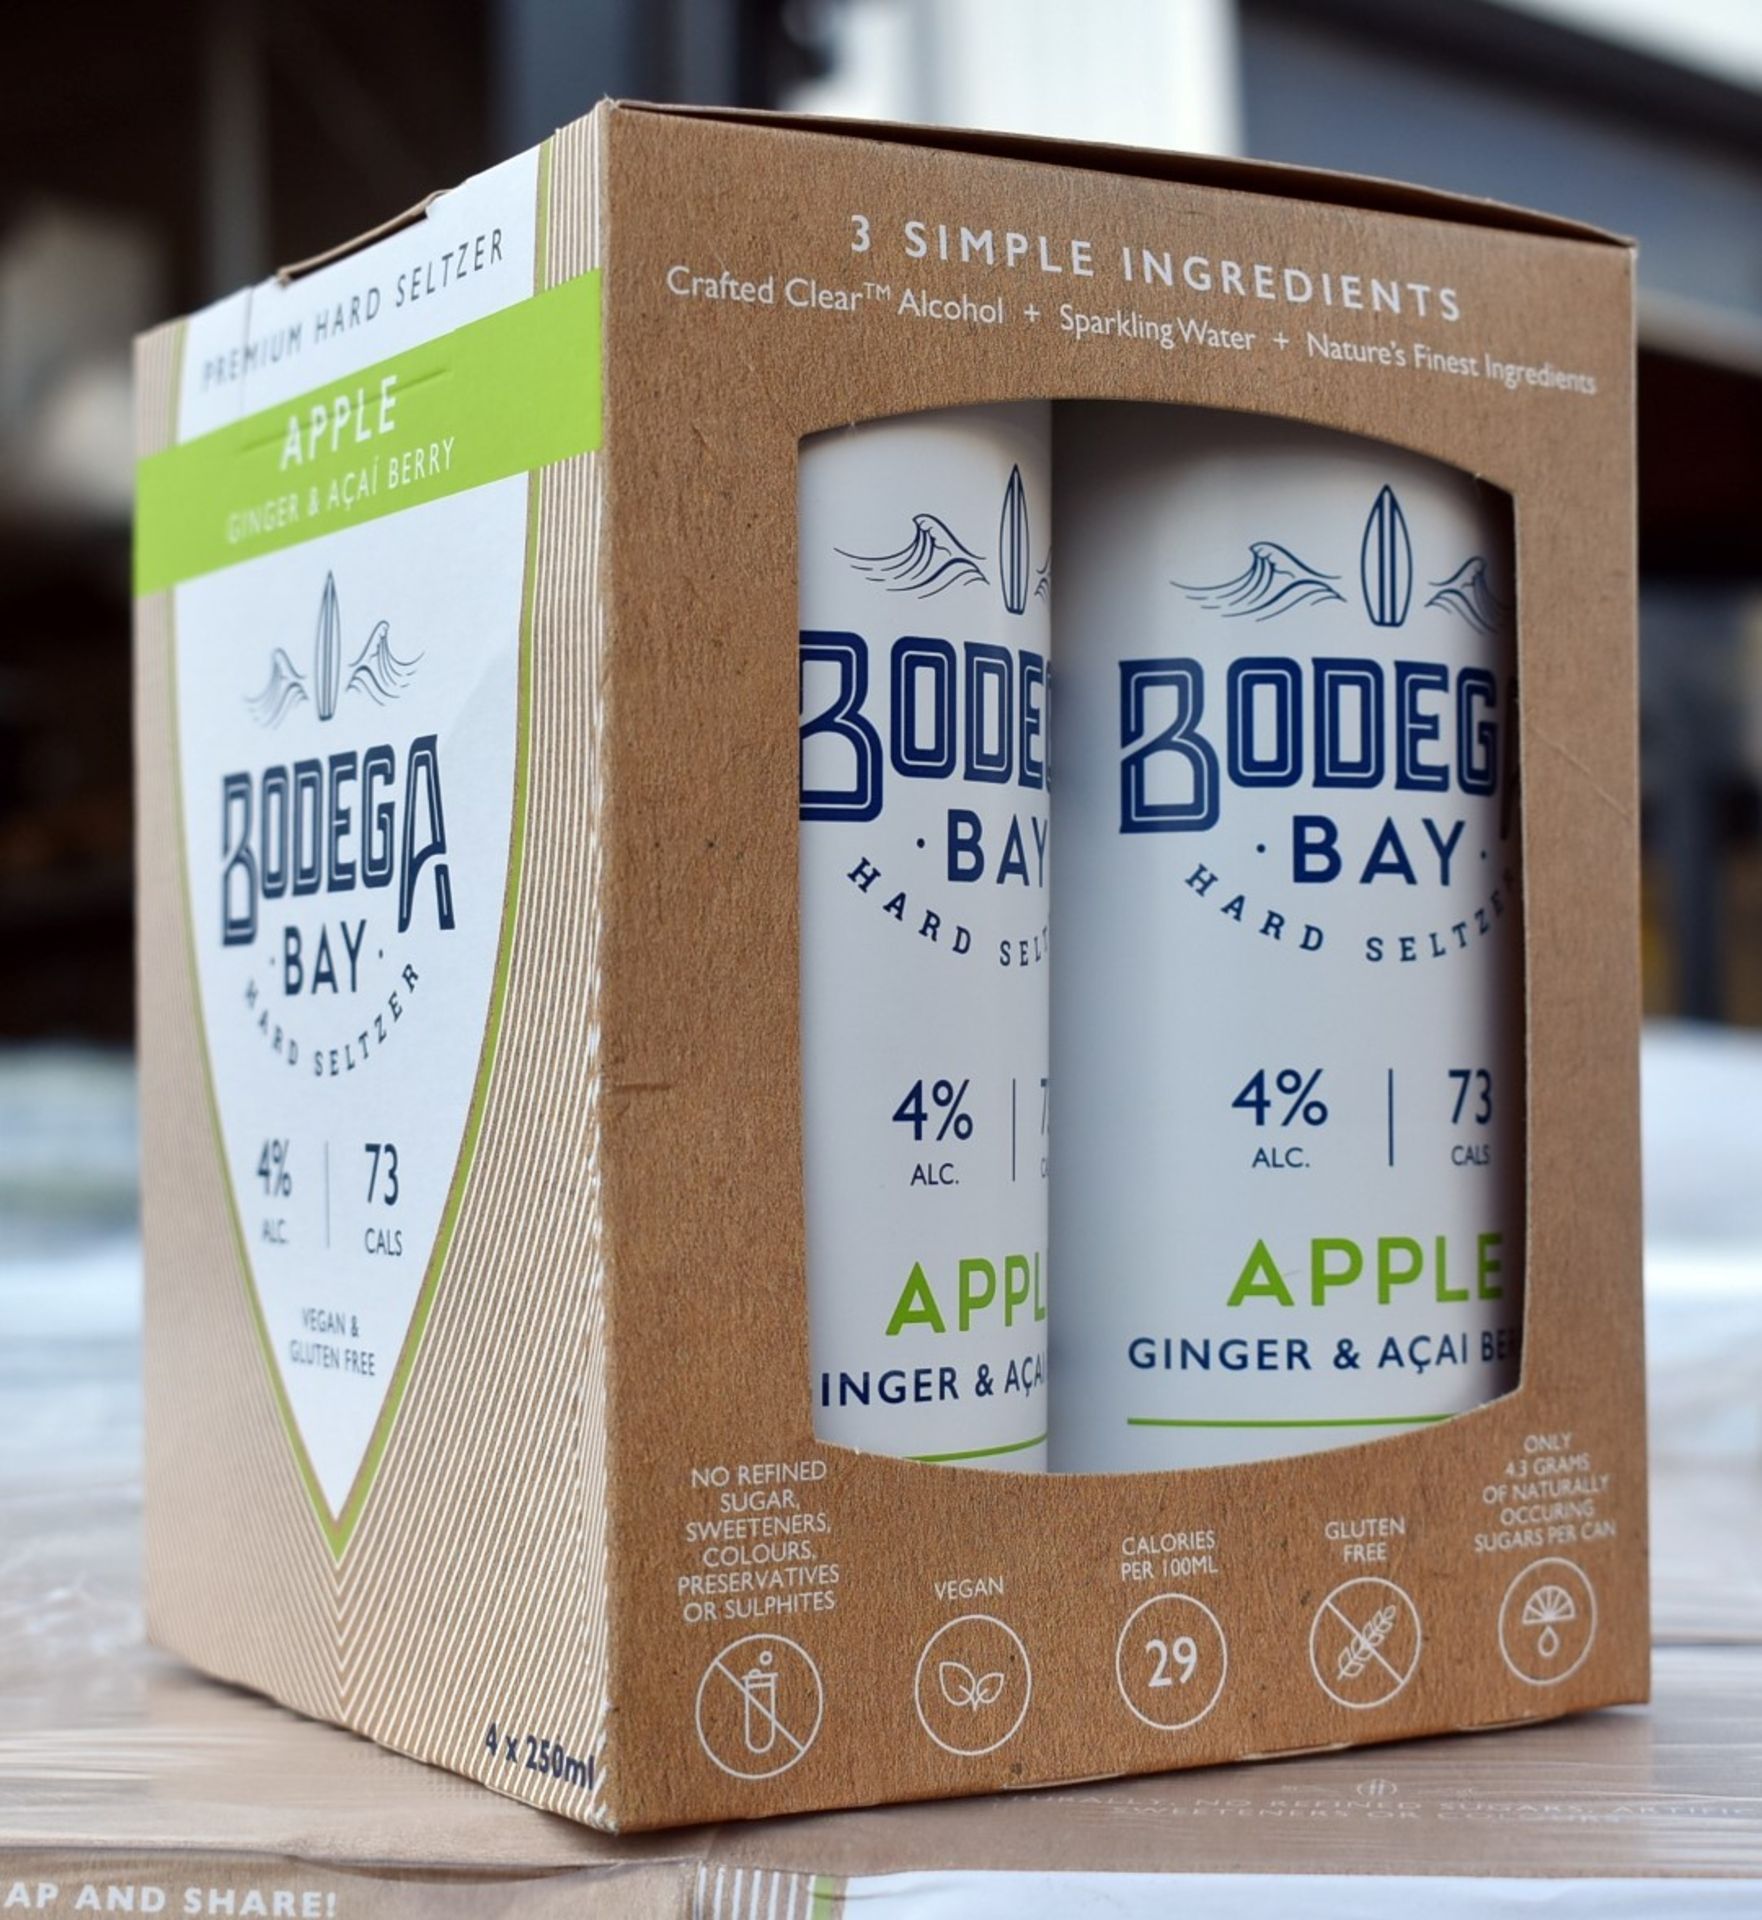 24 x Bodega Bay Hard Seltzer 250ml Alcoholic Sparkling Water Drinks - Apple Ginger & Acai Berry - Image 11 of 11